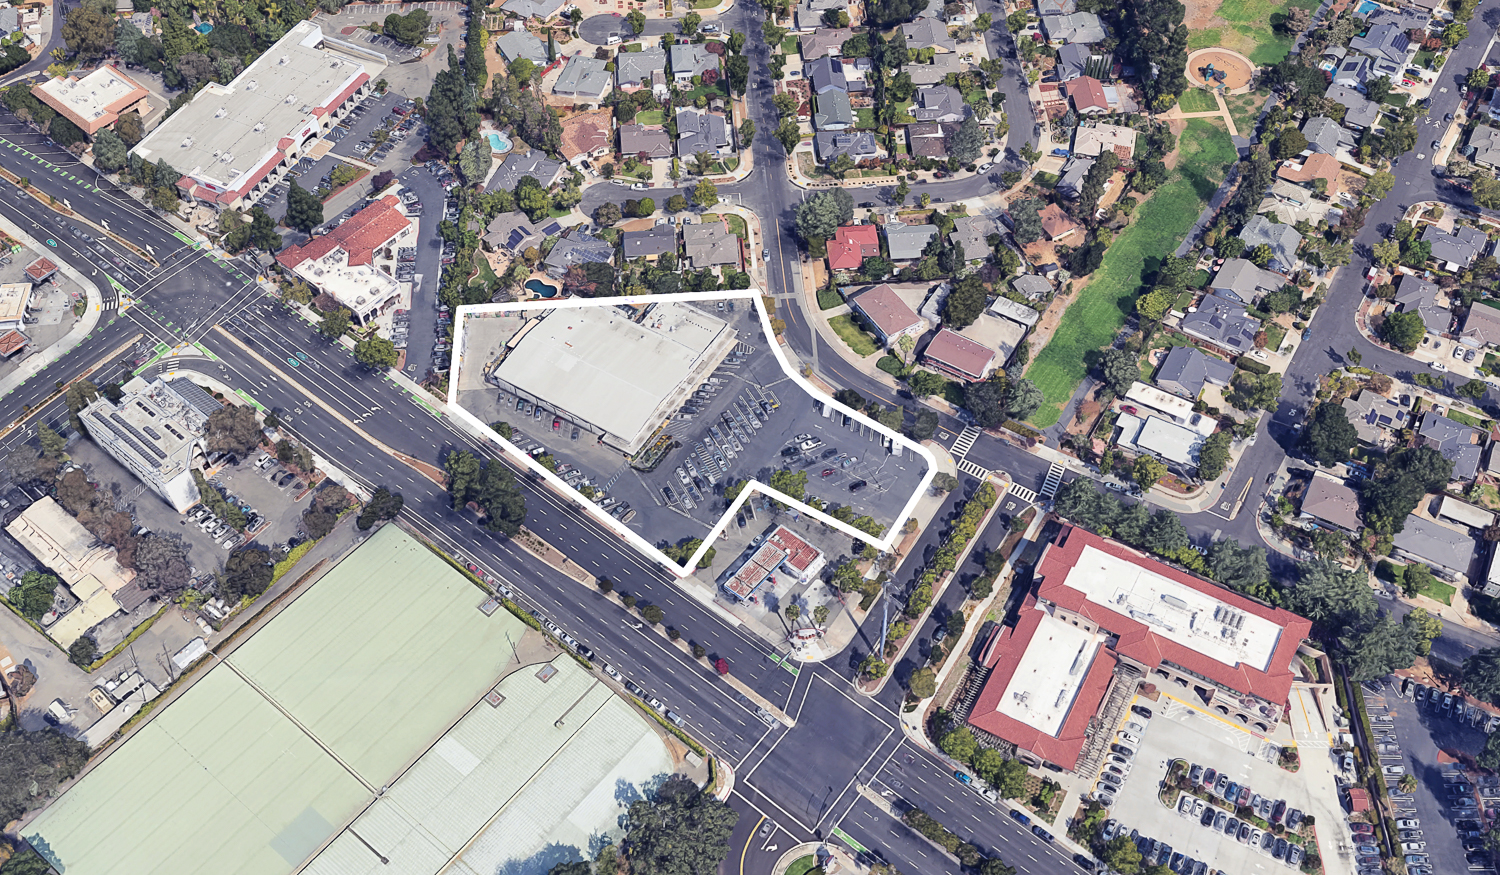 15300 Los Gatos Boulevard, image via Google Satellite